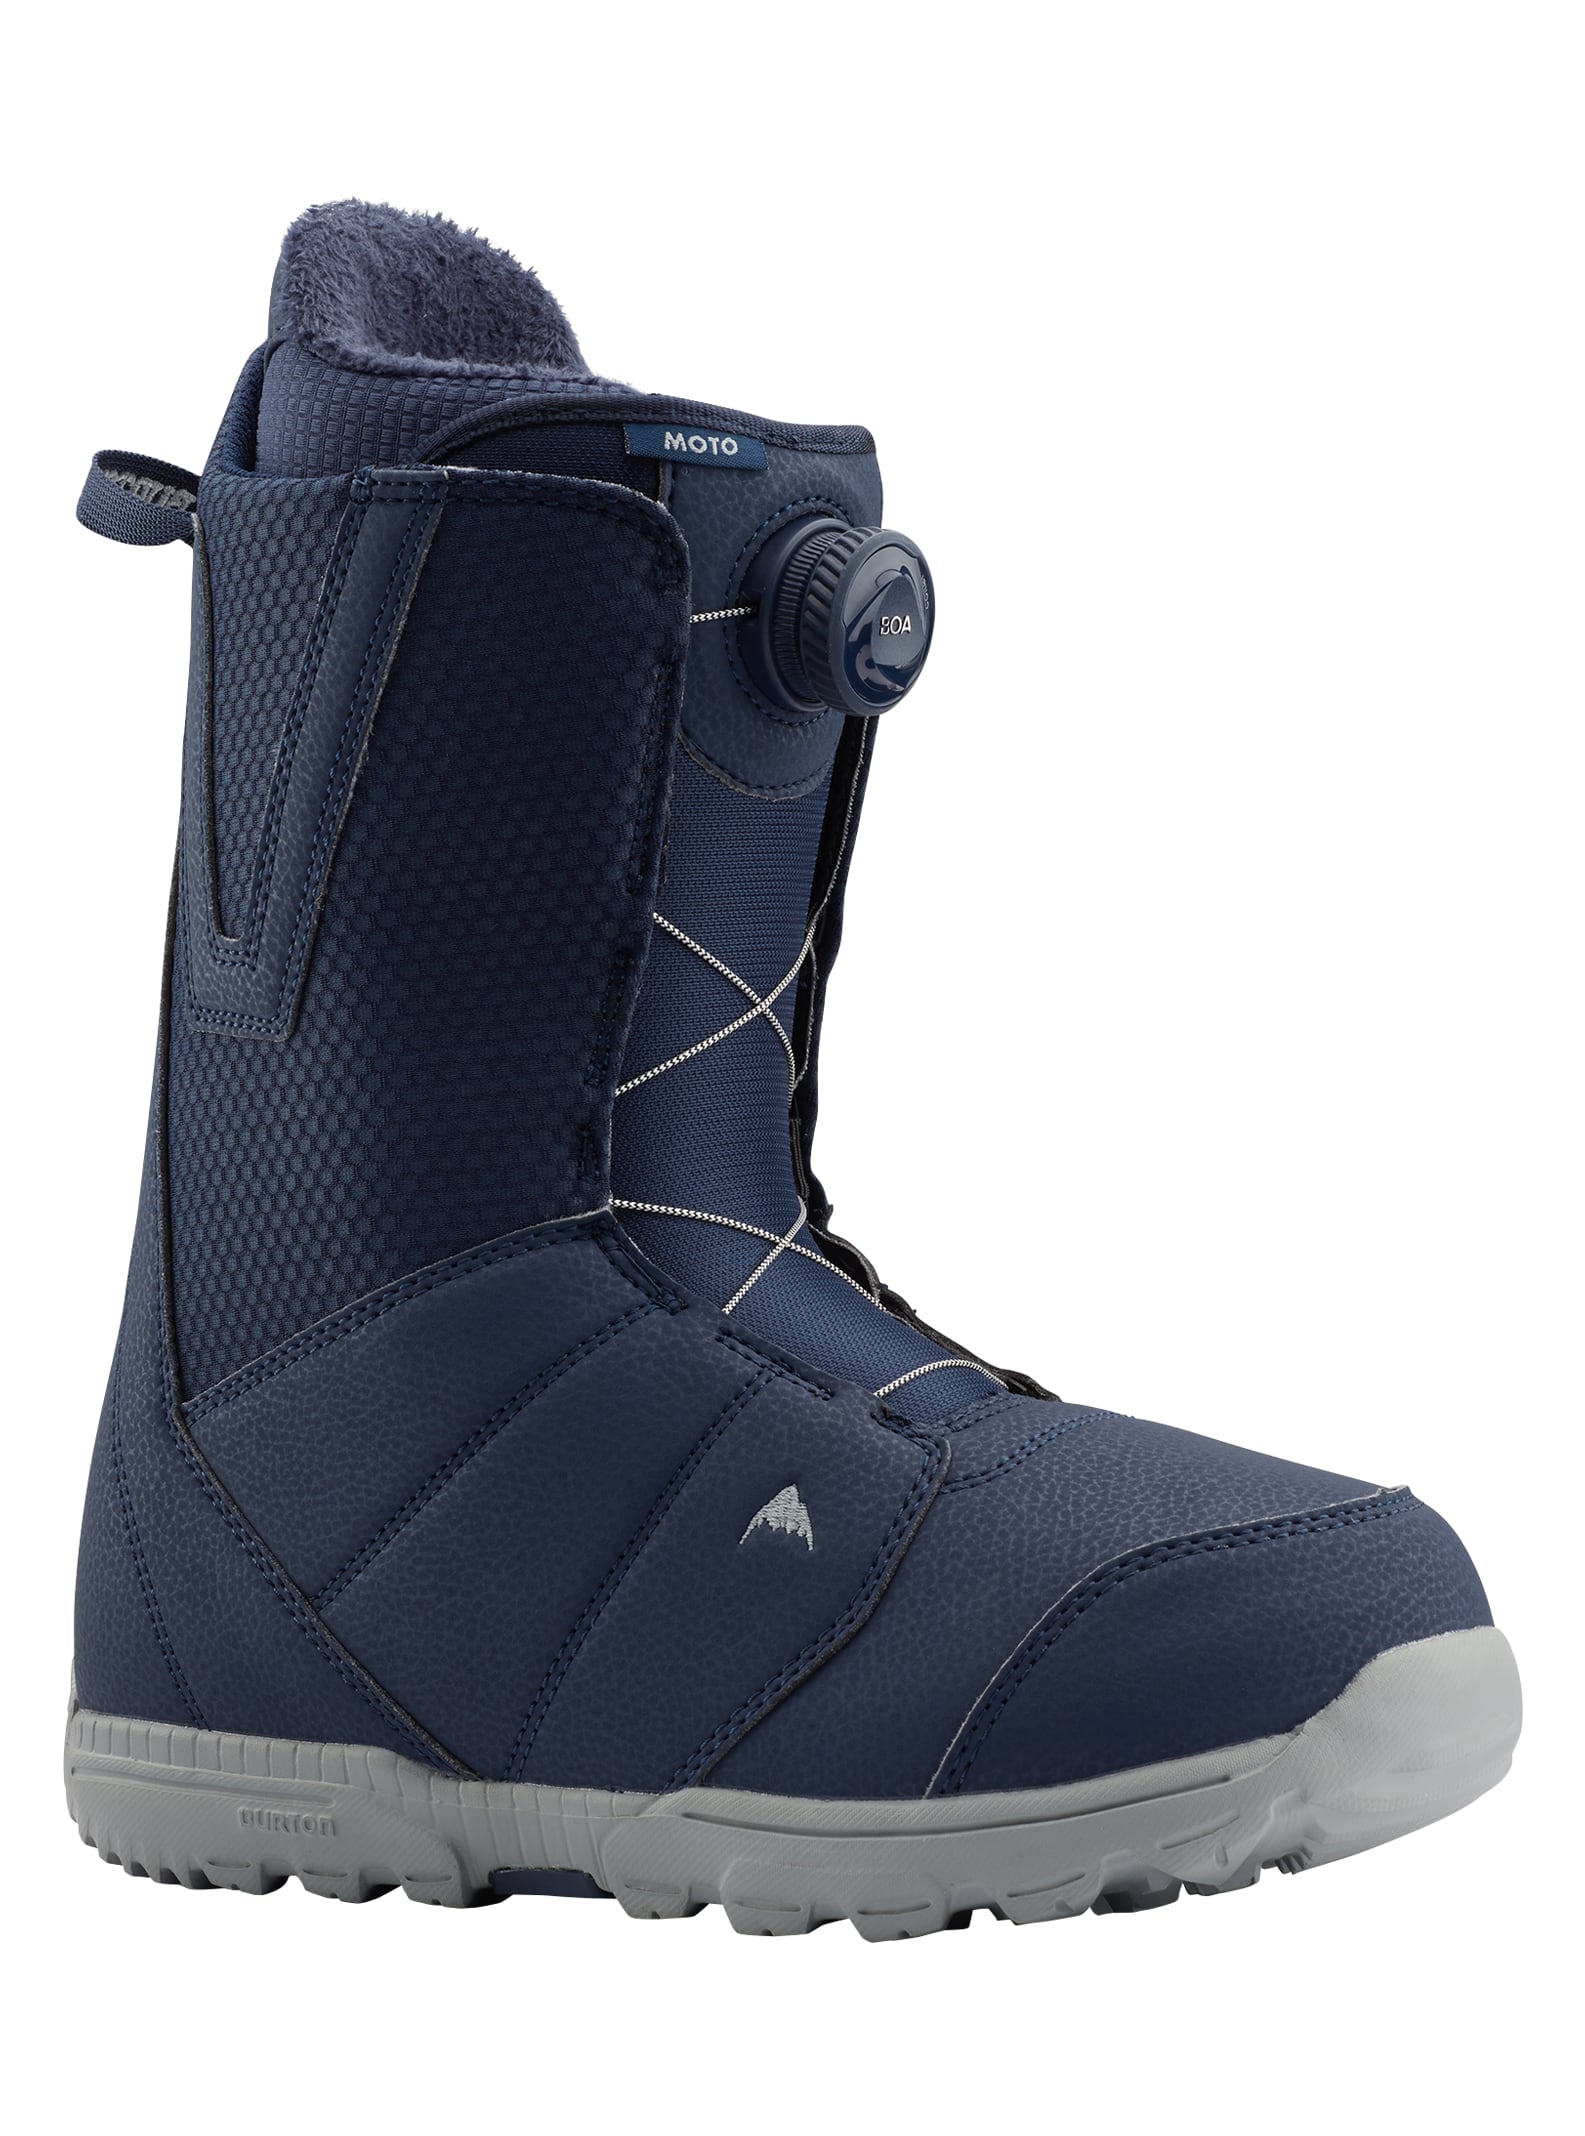 Burton - Boots de snowboard Moto Boa® homme, Blue, 105